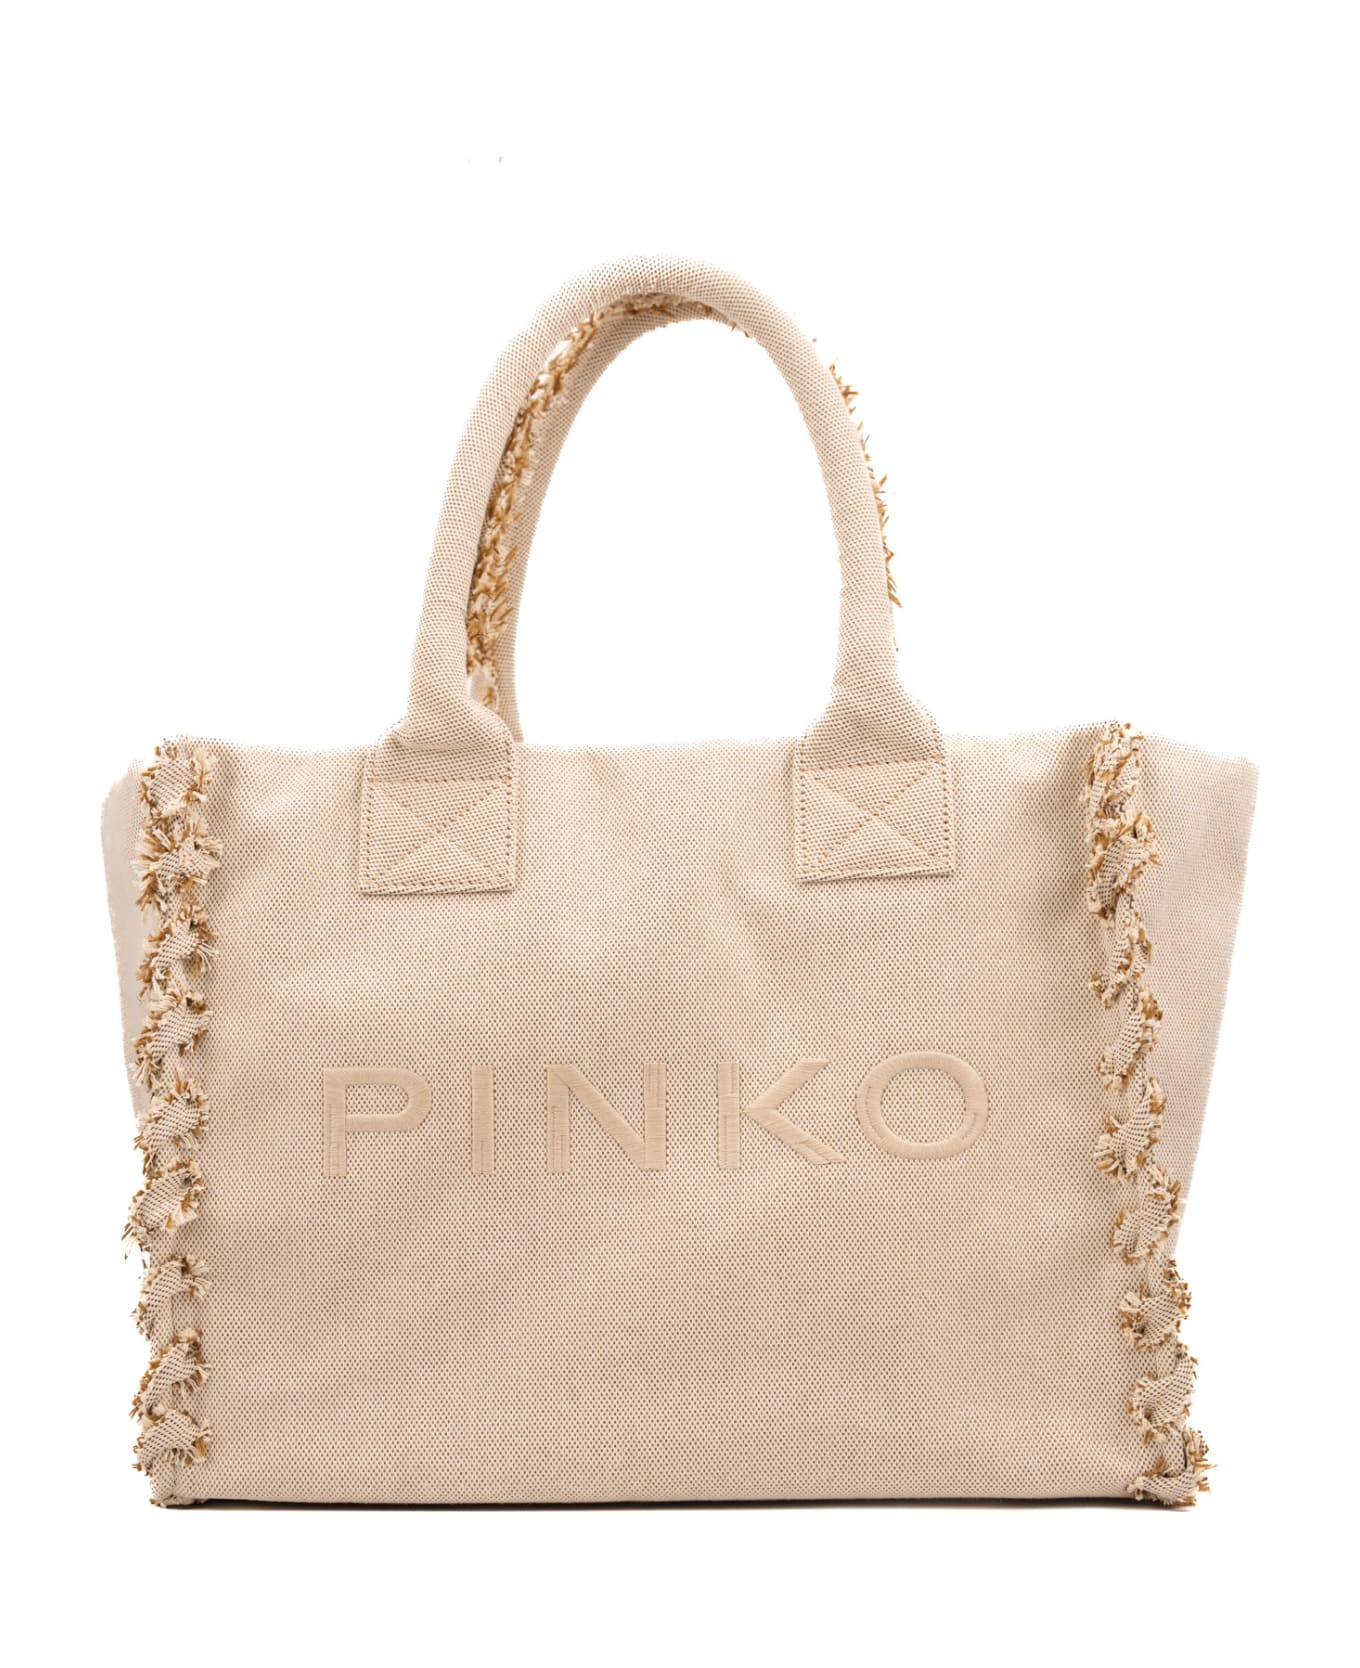 Pinko Canvas Beach Shopper - Sabbia/ecru-antique gold